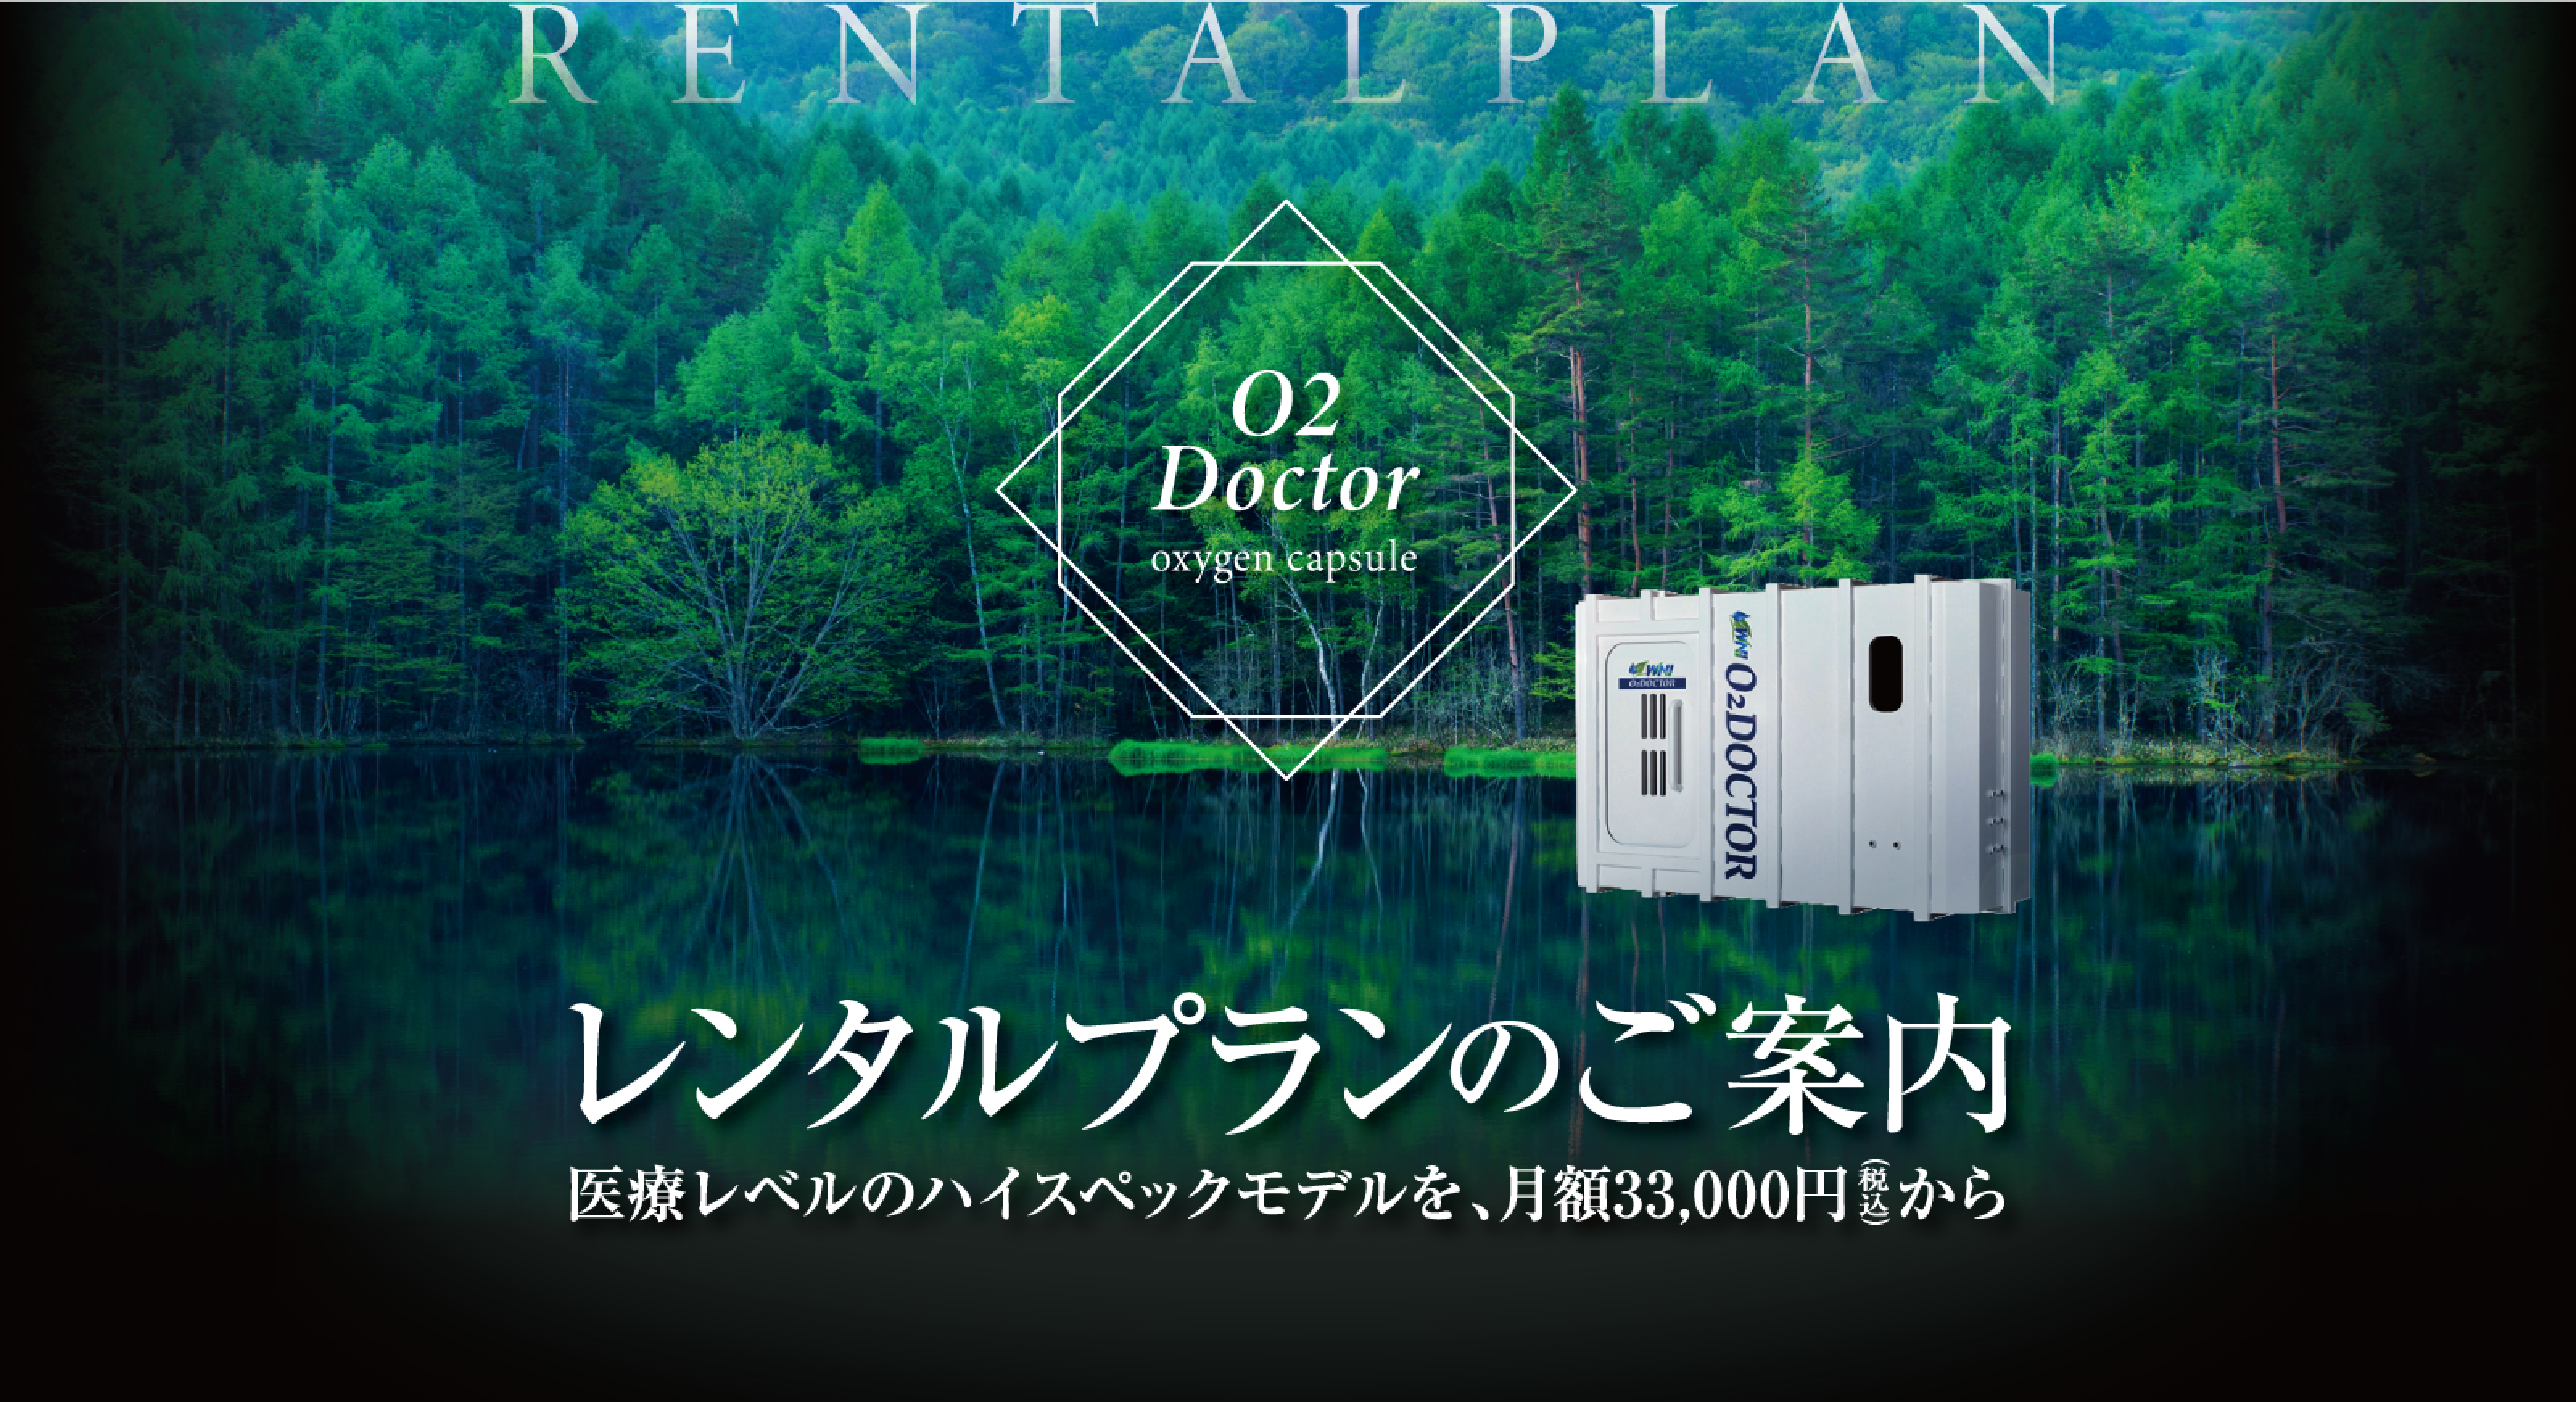 RENTALPLAN O2Docter oxygen capsule レンタルプランのご案内 医療レベルのハイスペックモデルを、月額33,000円(税込)から